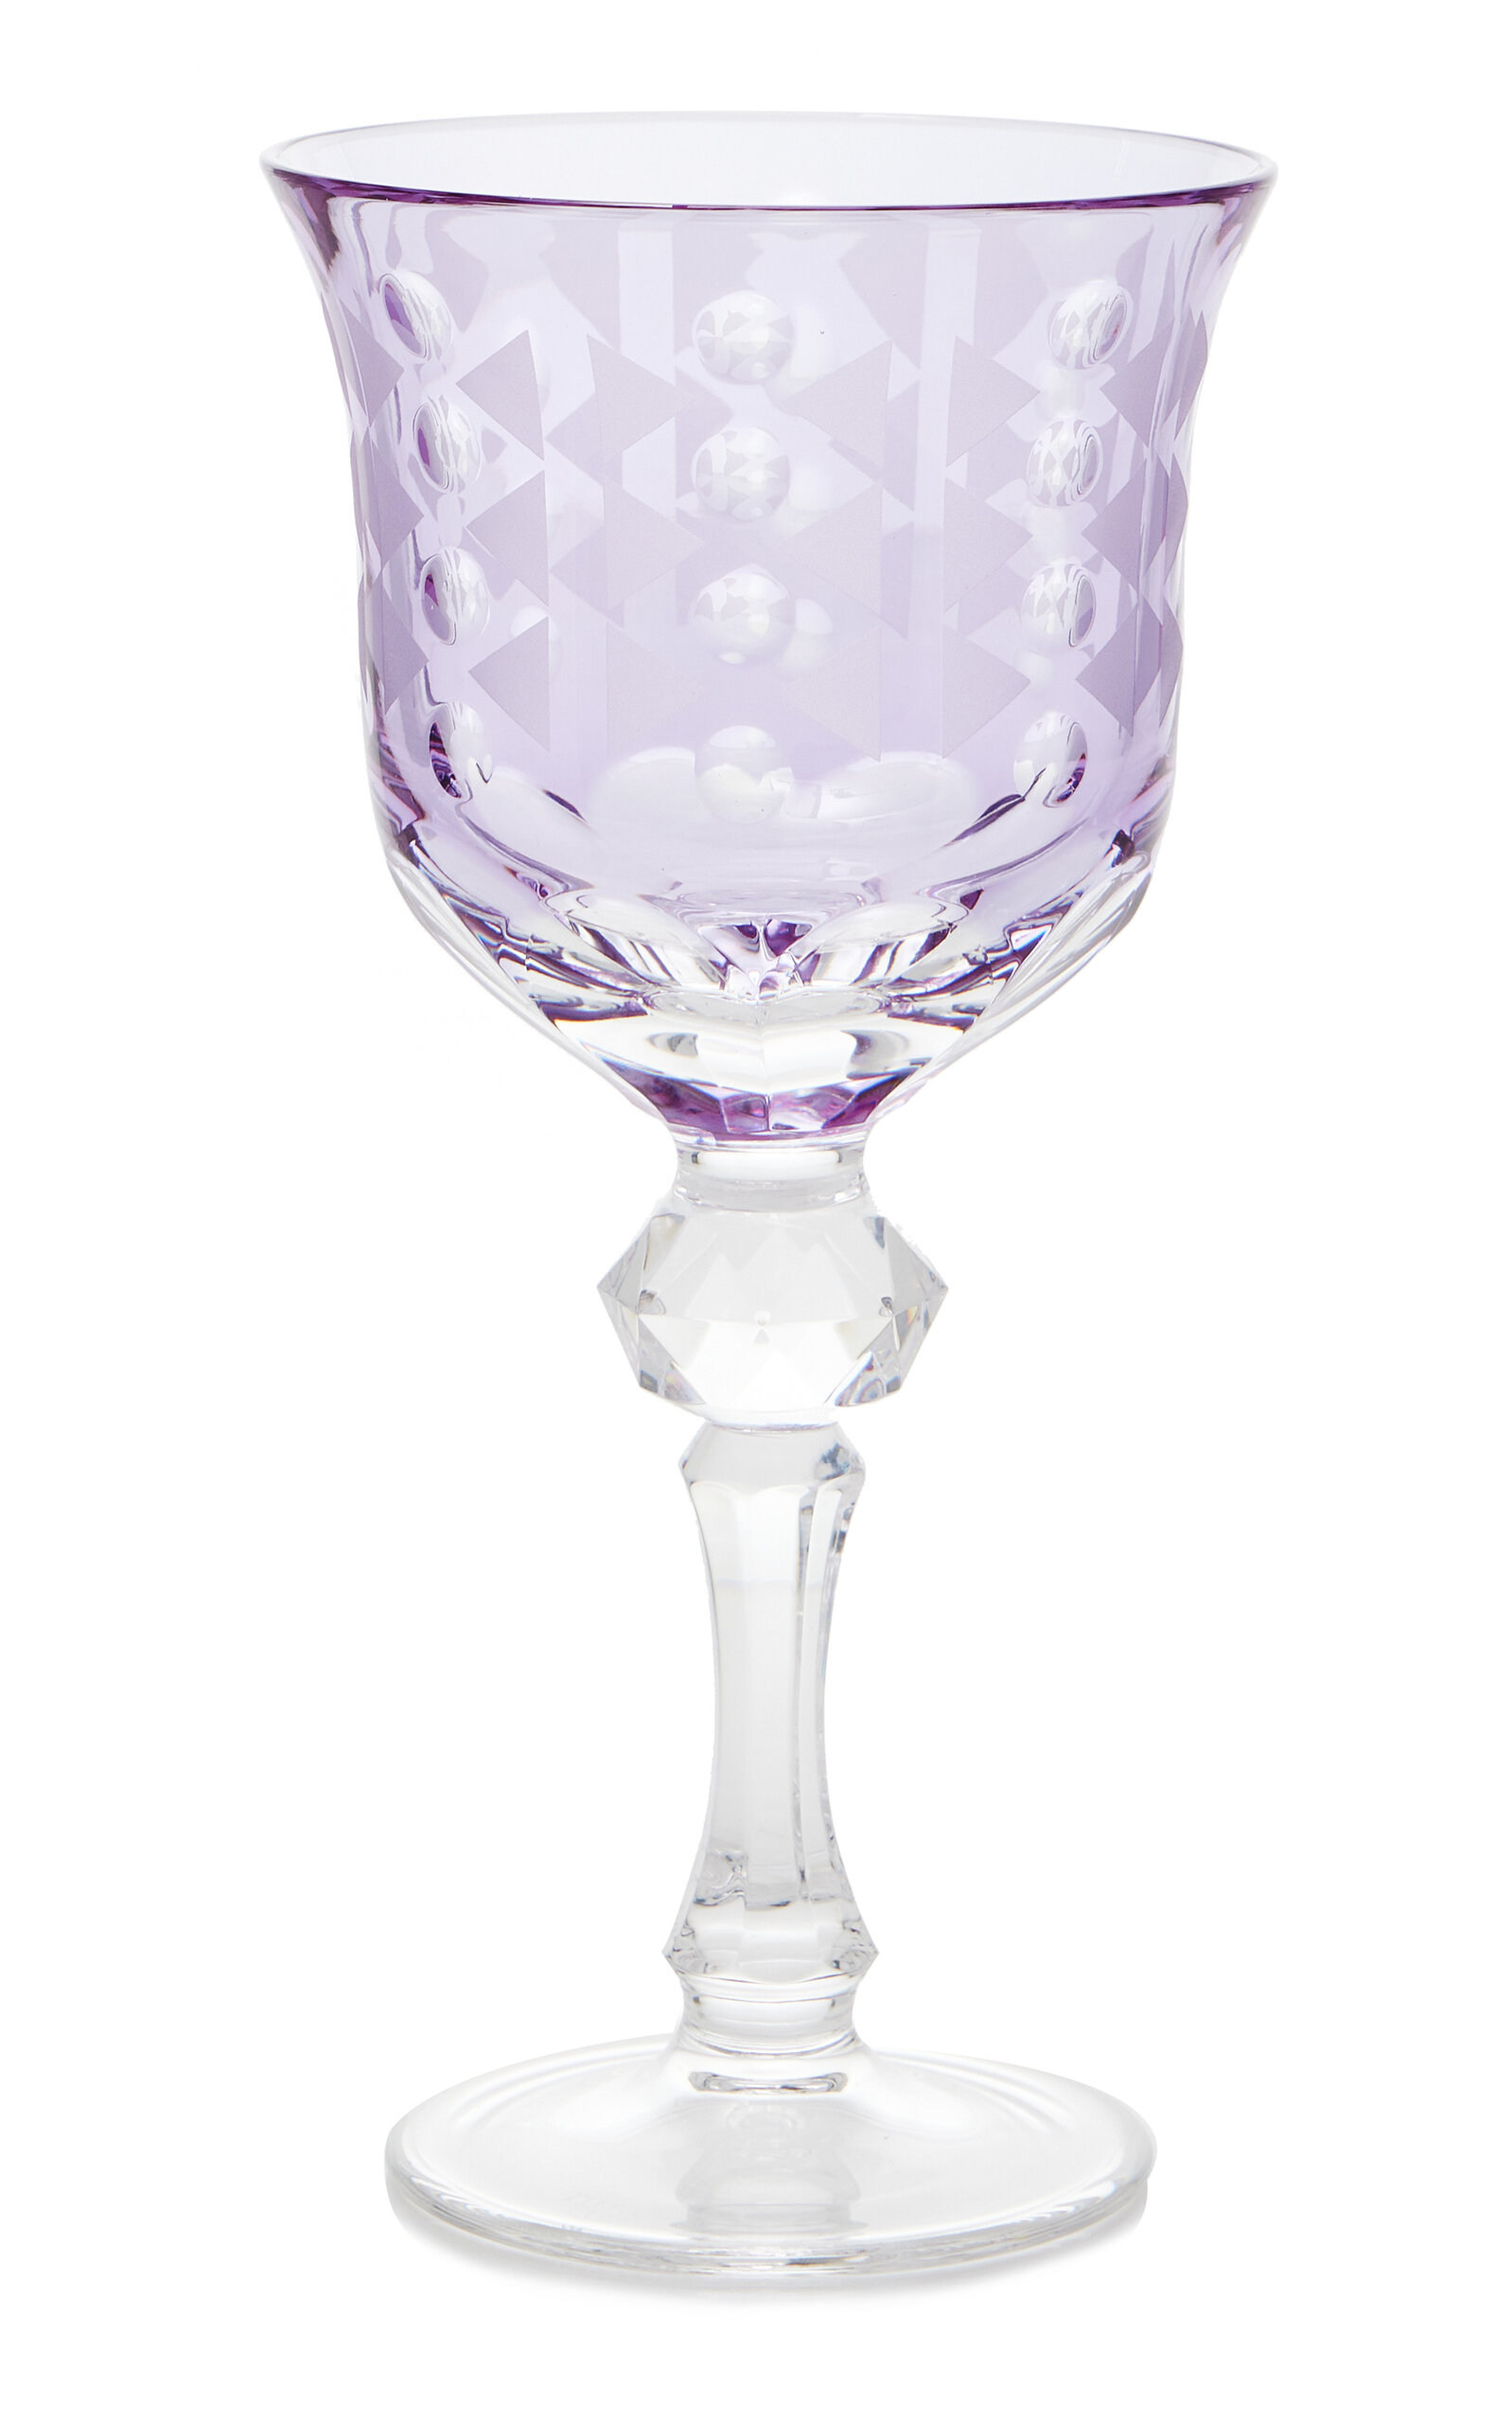 Tiffany & Co Berries White Wine Glass In Purple